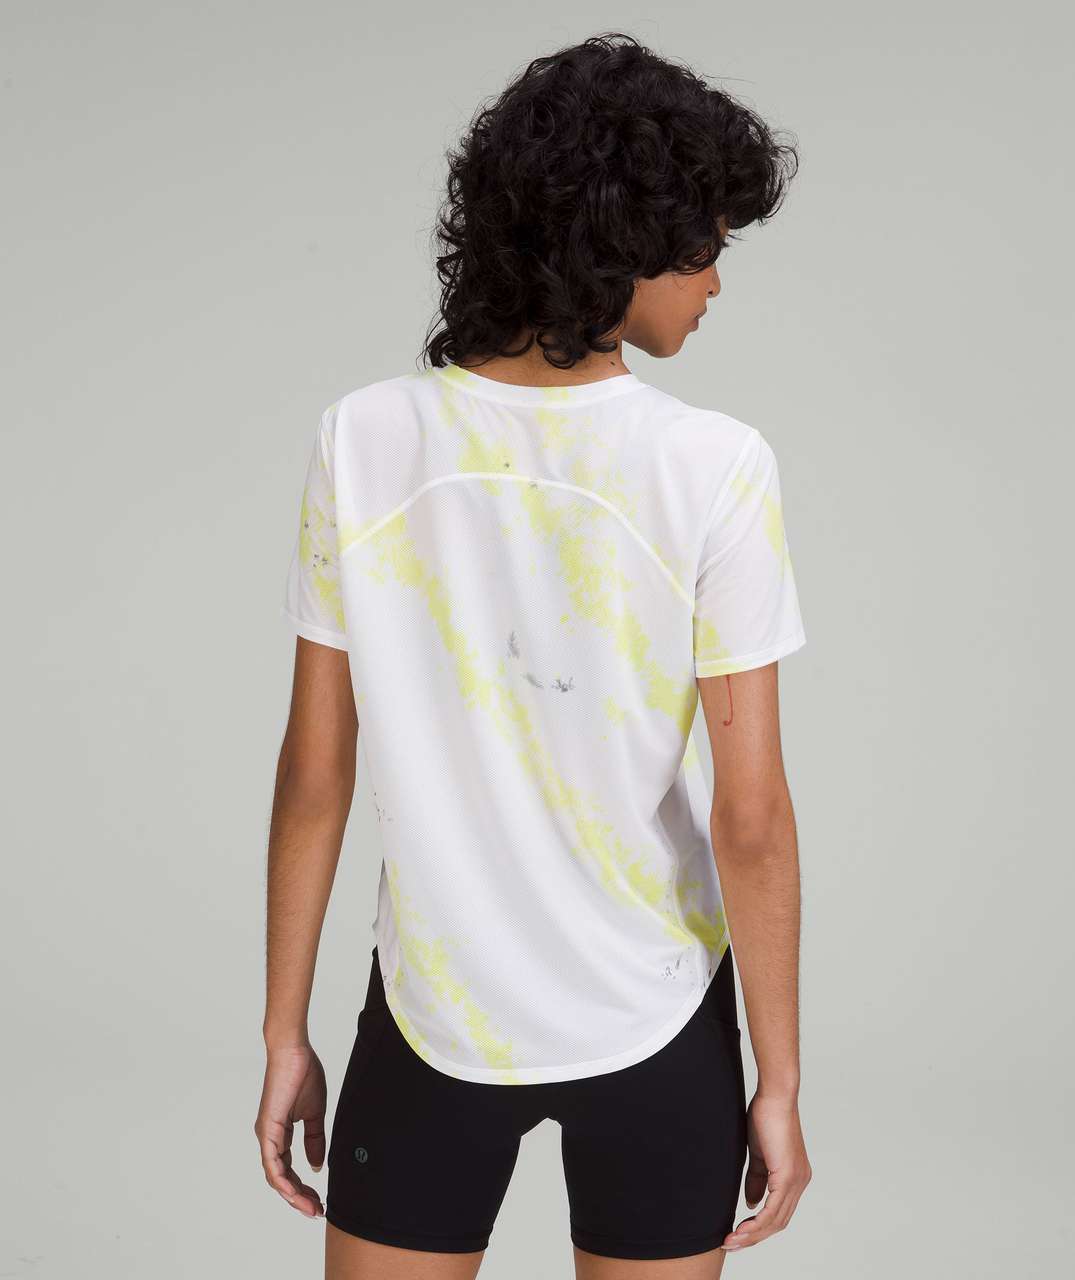 Lululemon High-Neck Running and Training T-Shirt - Cross Court Wash Electric Lemon Multi